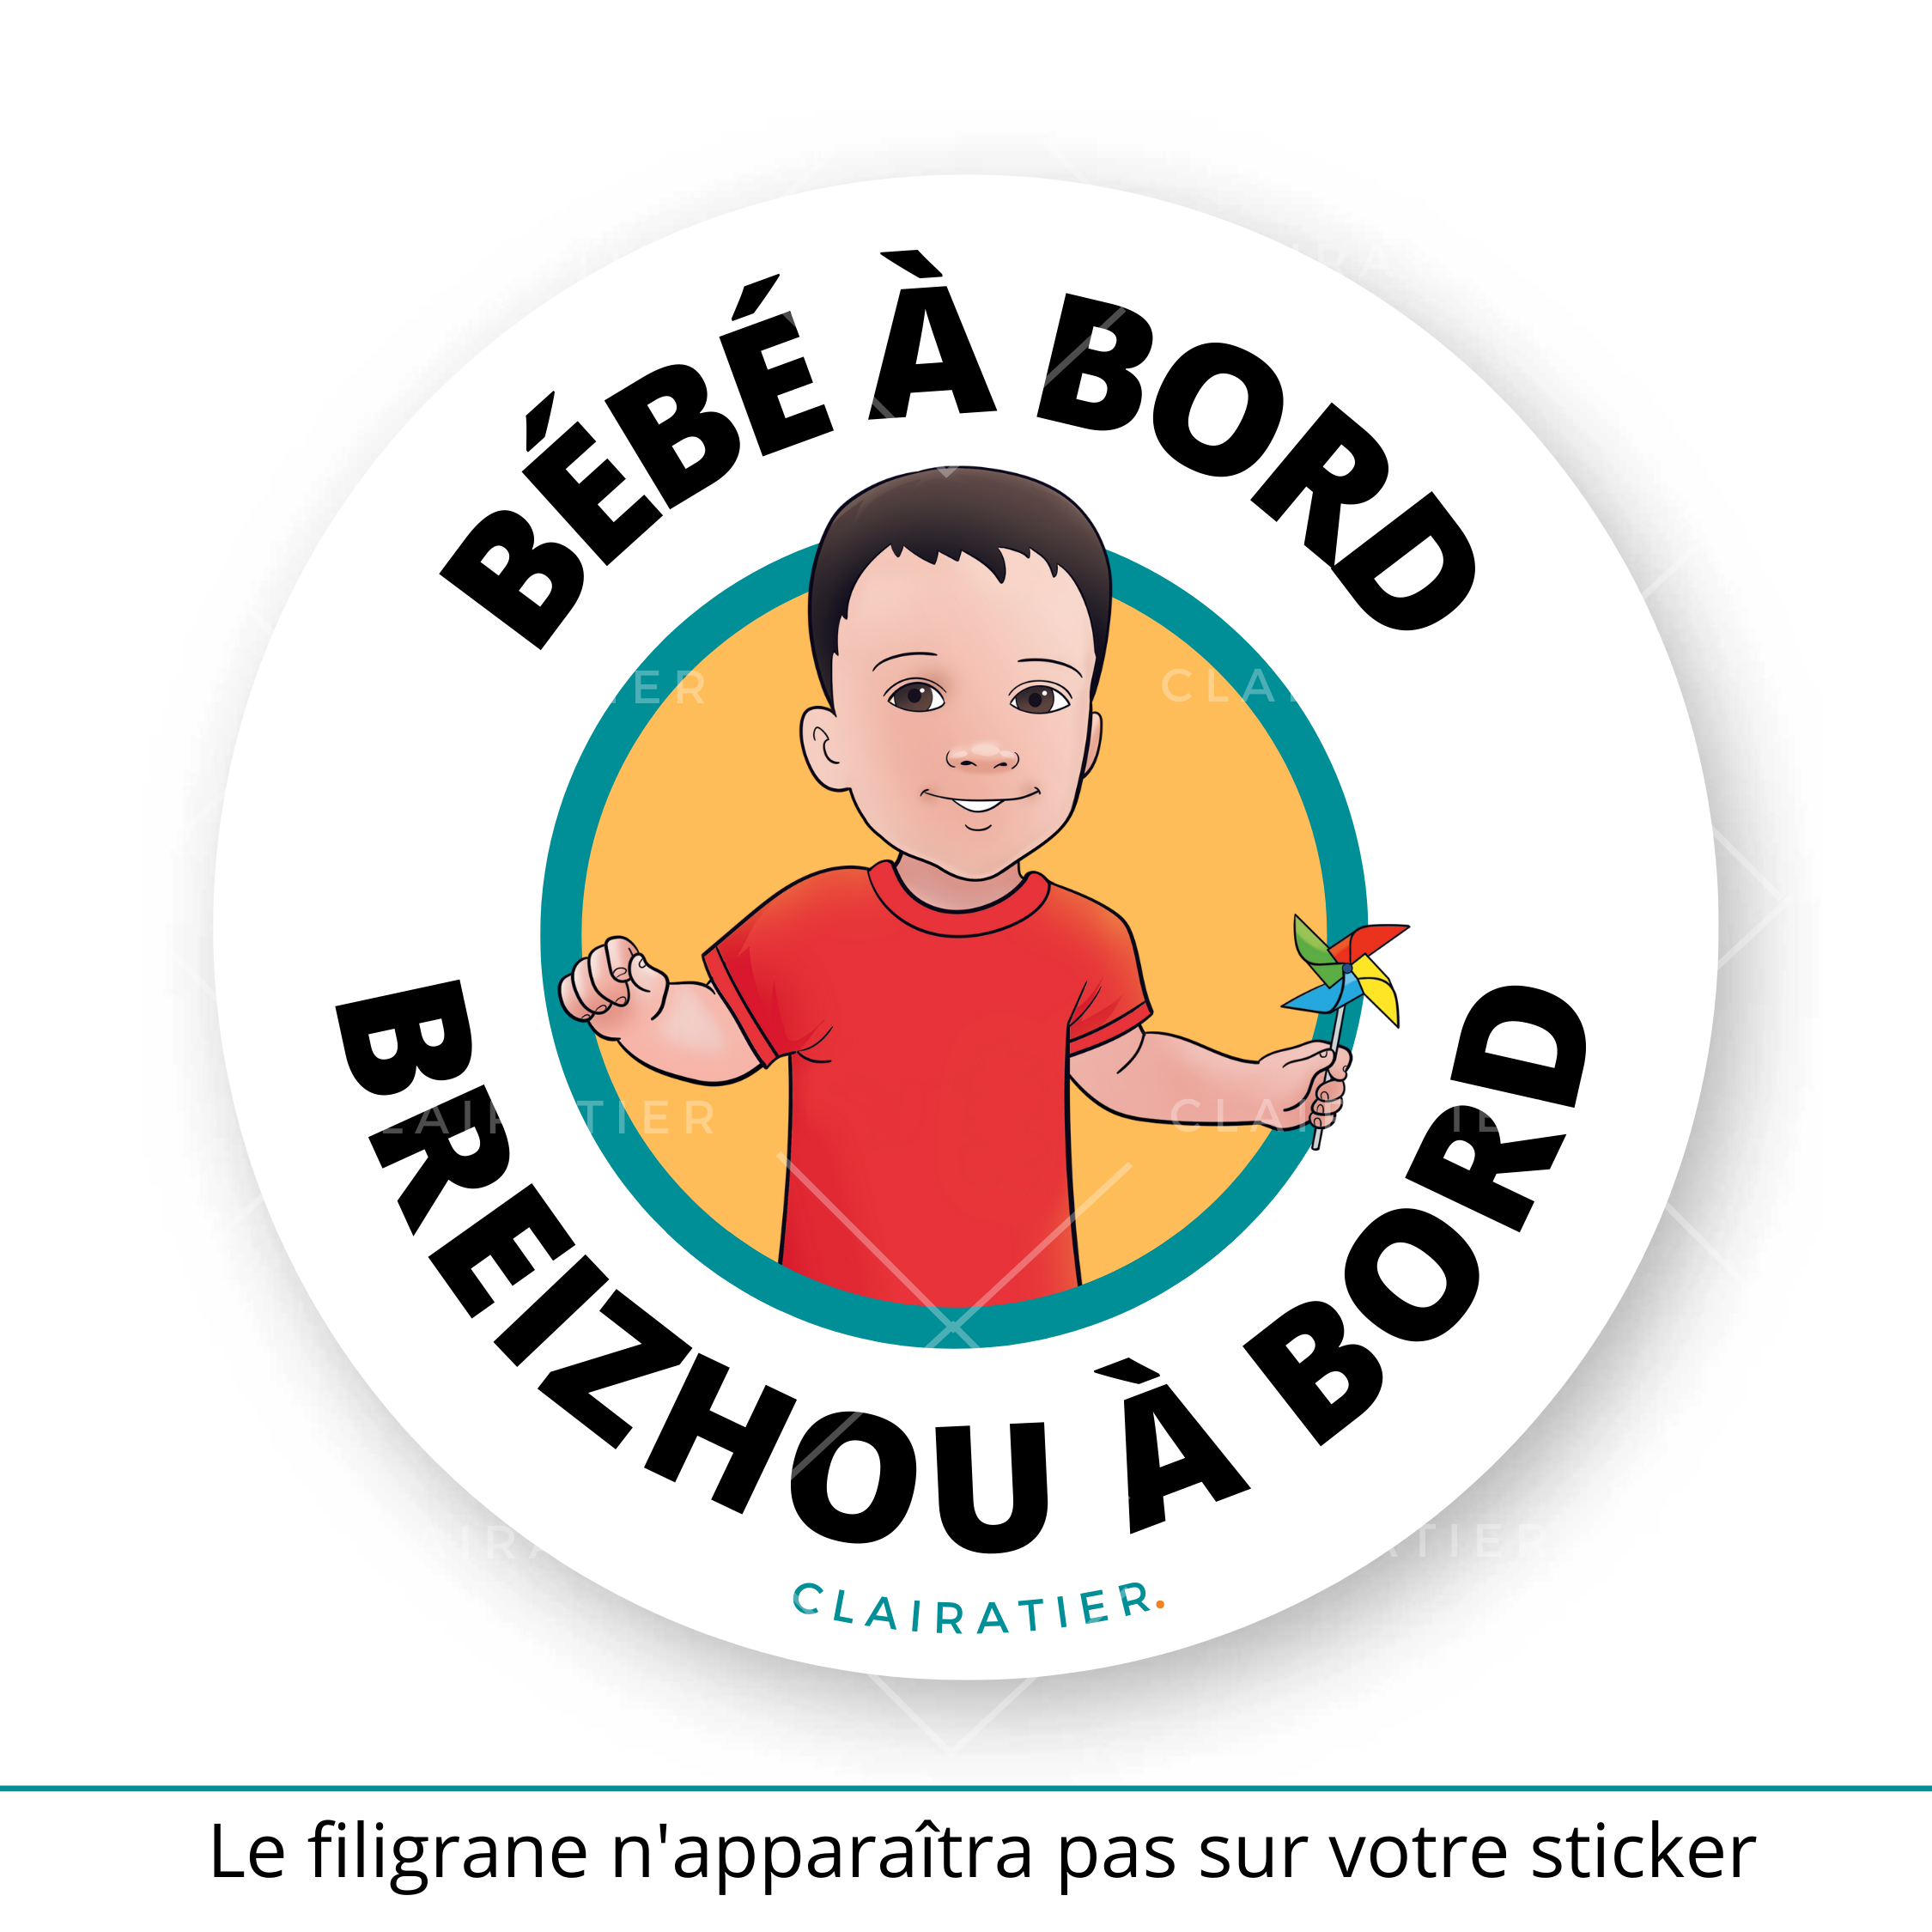 Clairabord - Garçons - Sticker voiture bébé à bord – Clairatier